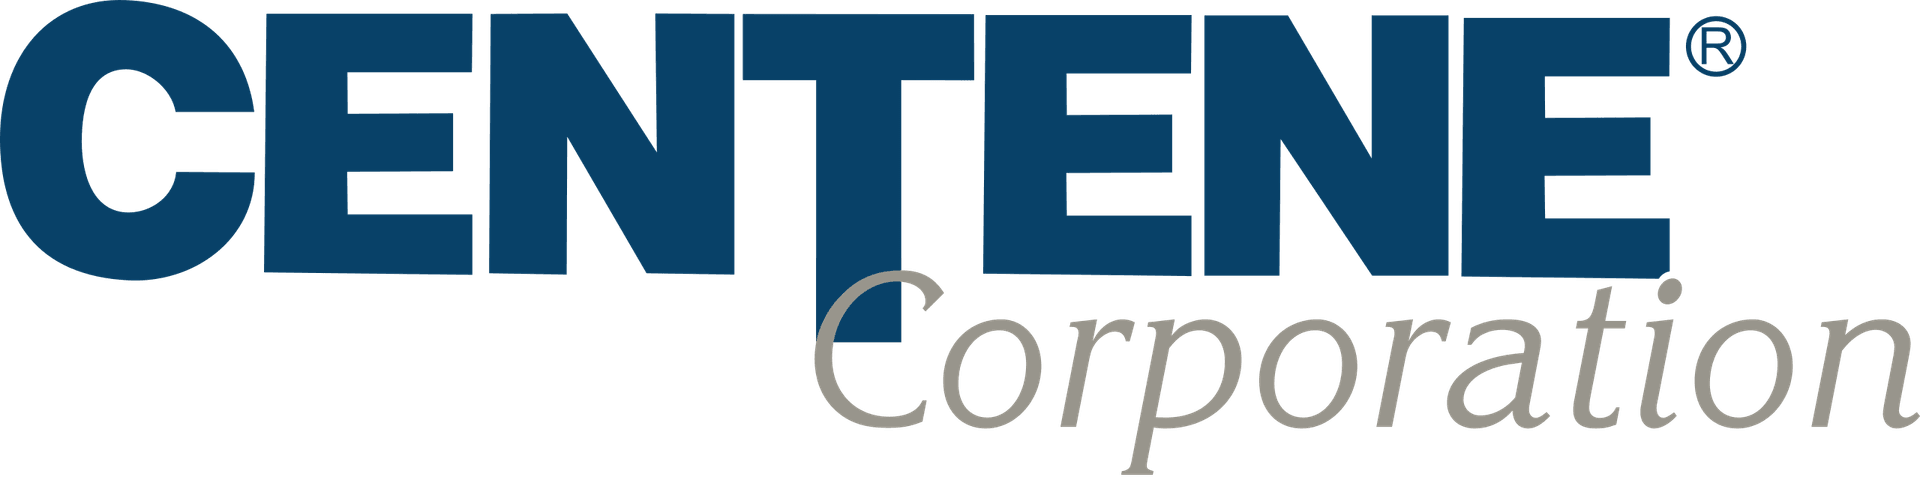 marketing strtaegy of centene corporation - logo